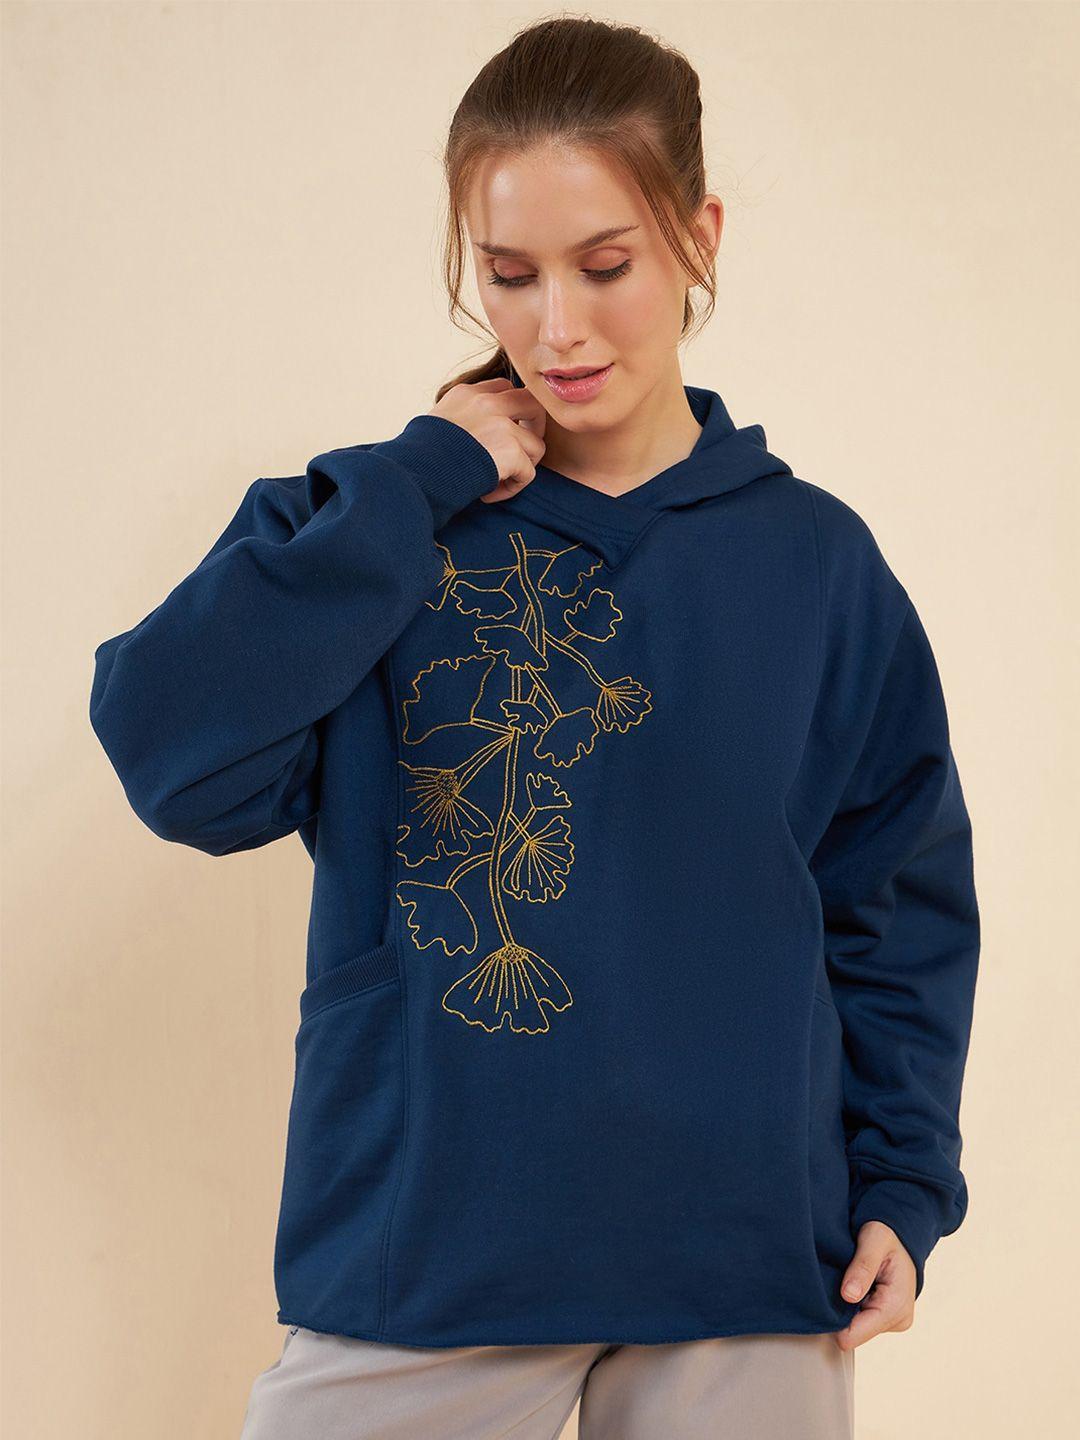 antheaa-navy-blue-floral-embroidered-hooded-fleece-sweatshirt